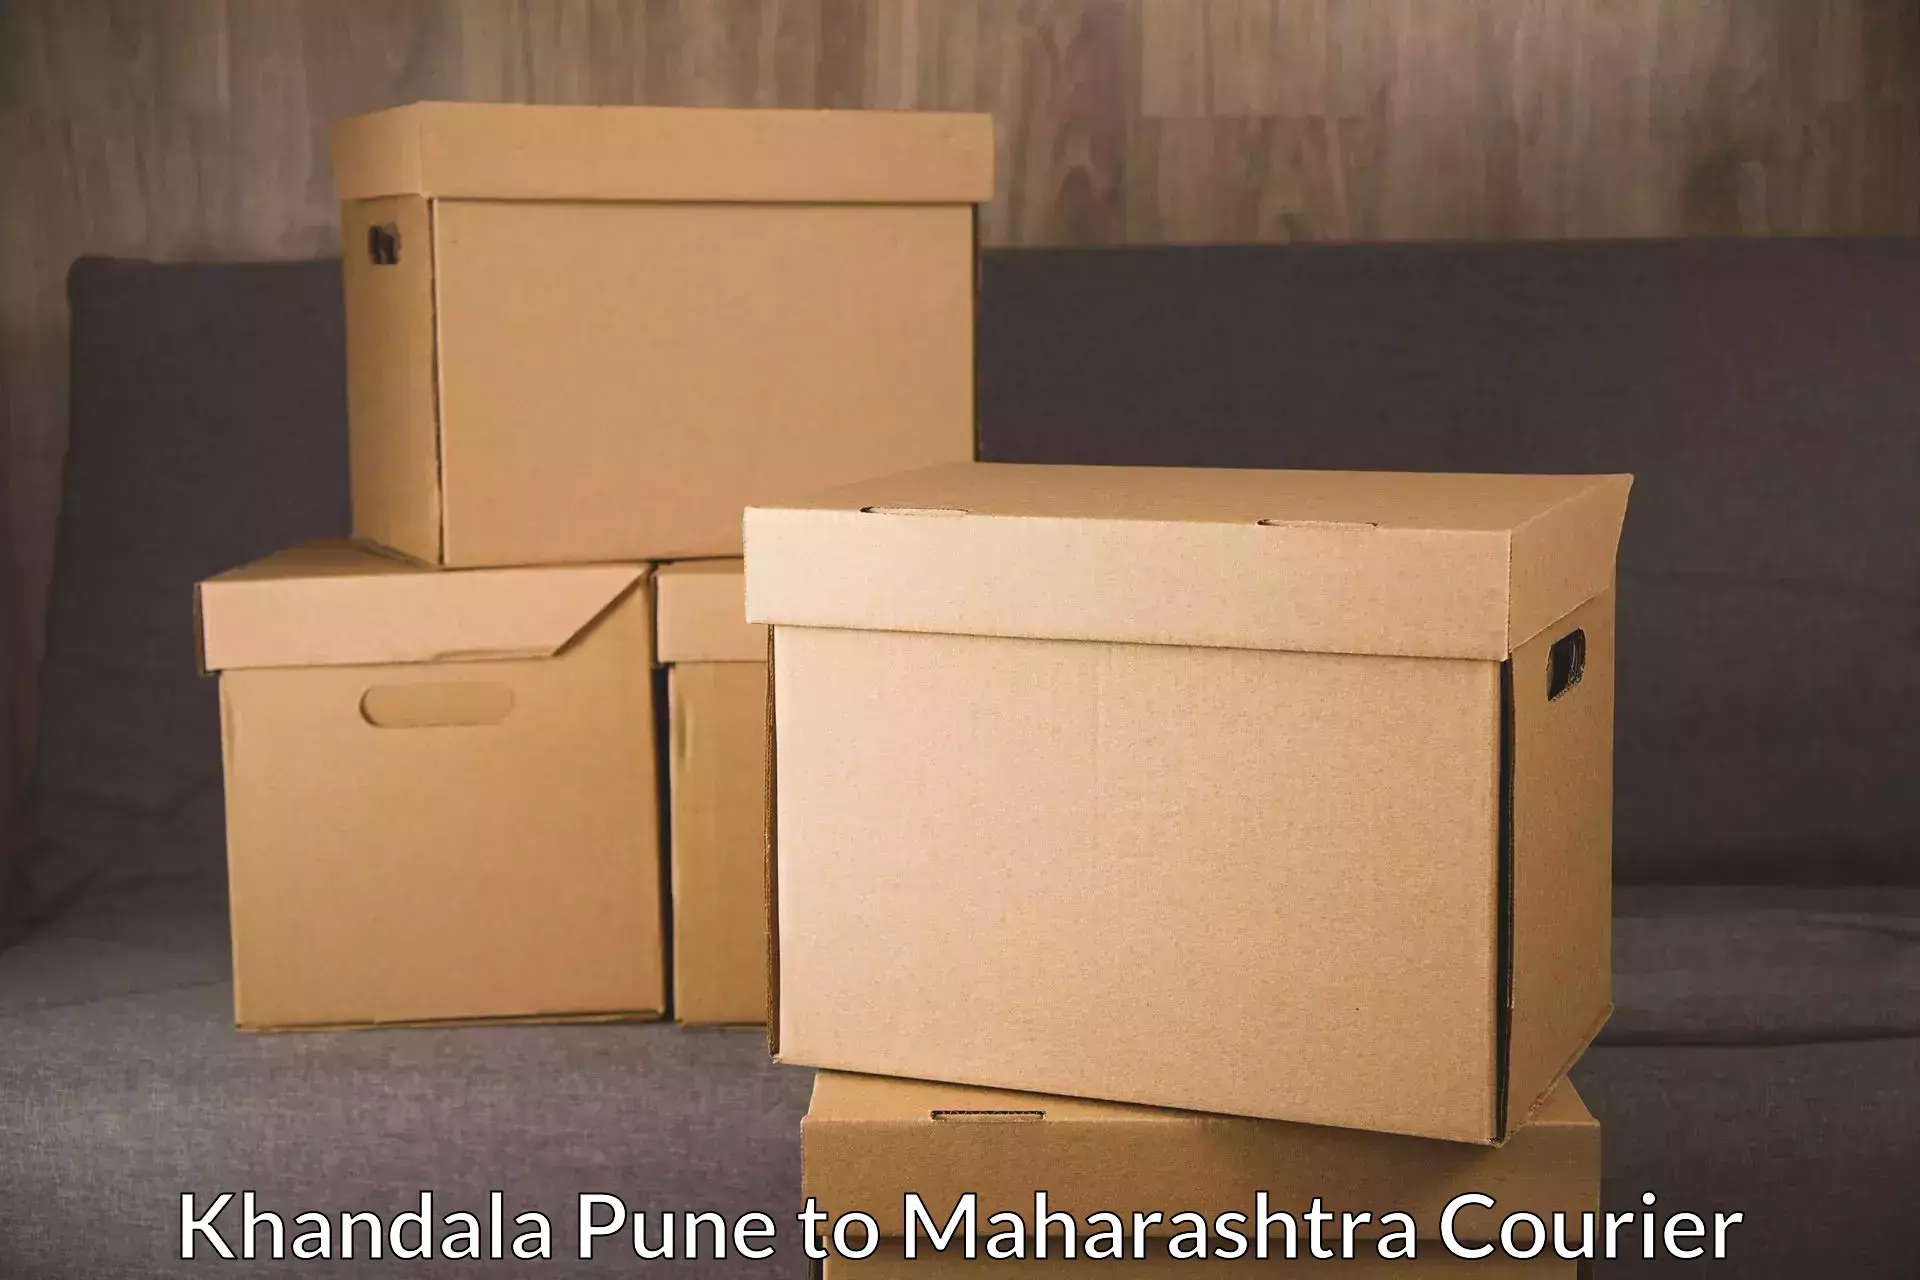 International parcel service Khandala Pune to Maharashtra